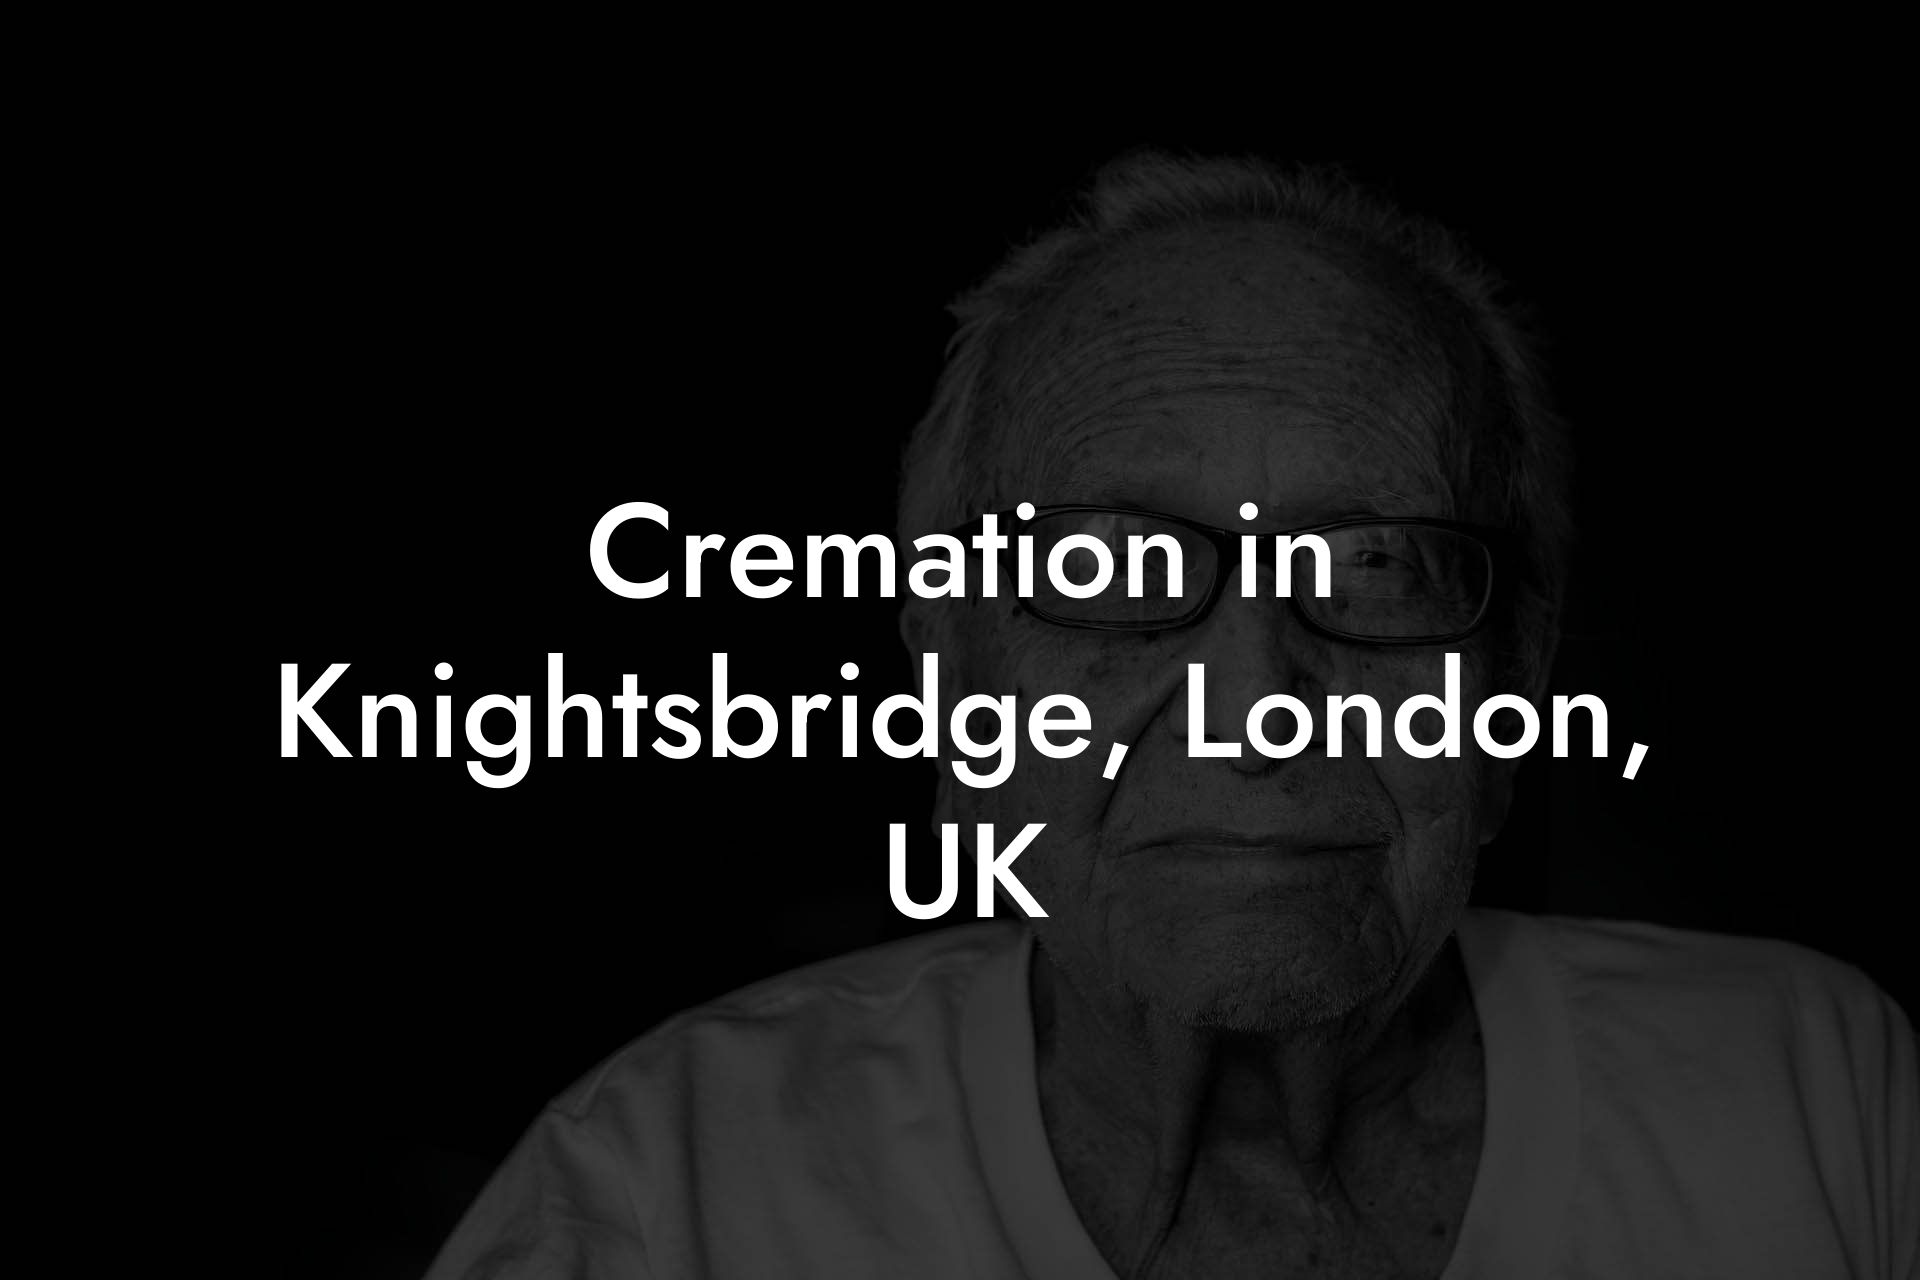 Cremation in Knightsbridge, London, UK